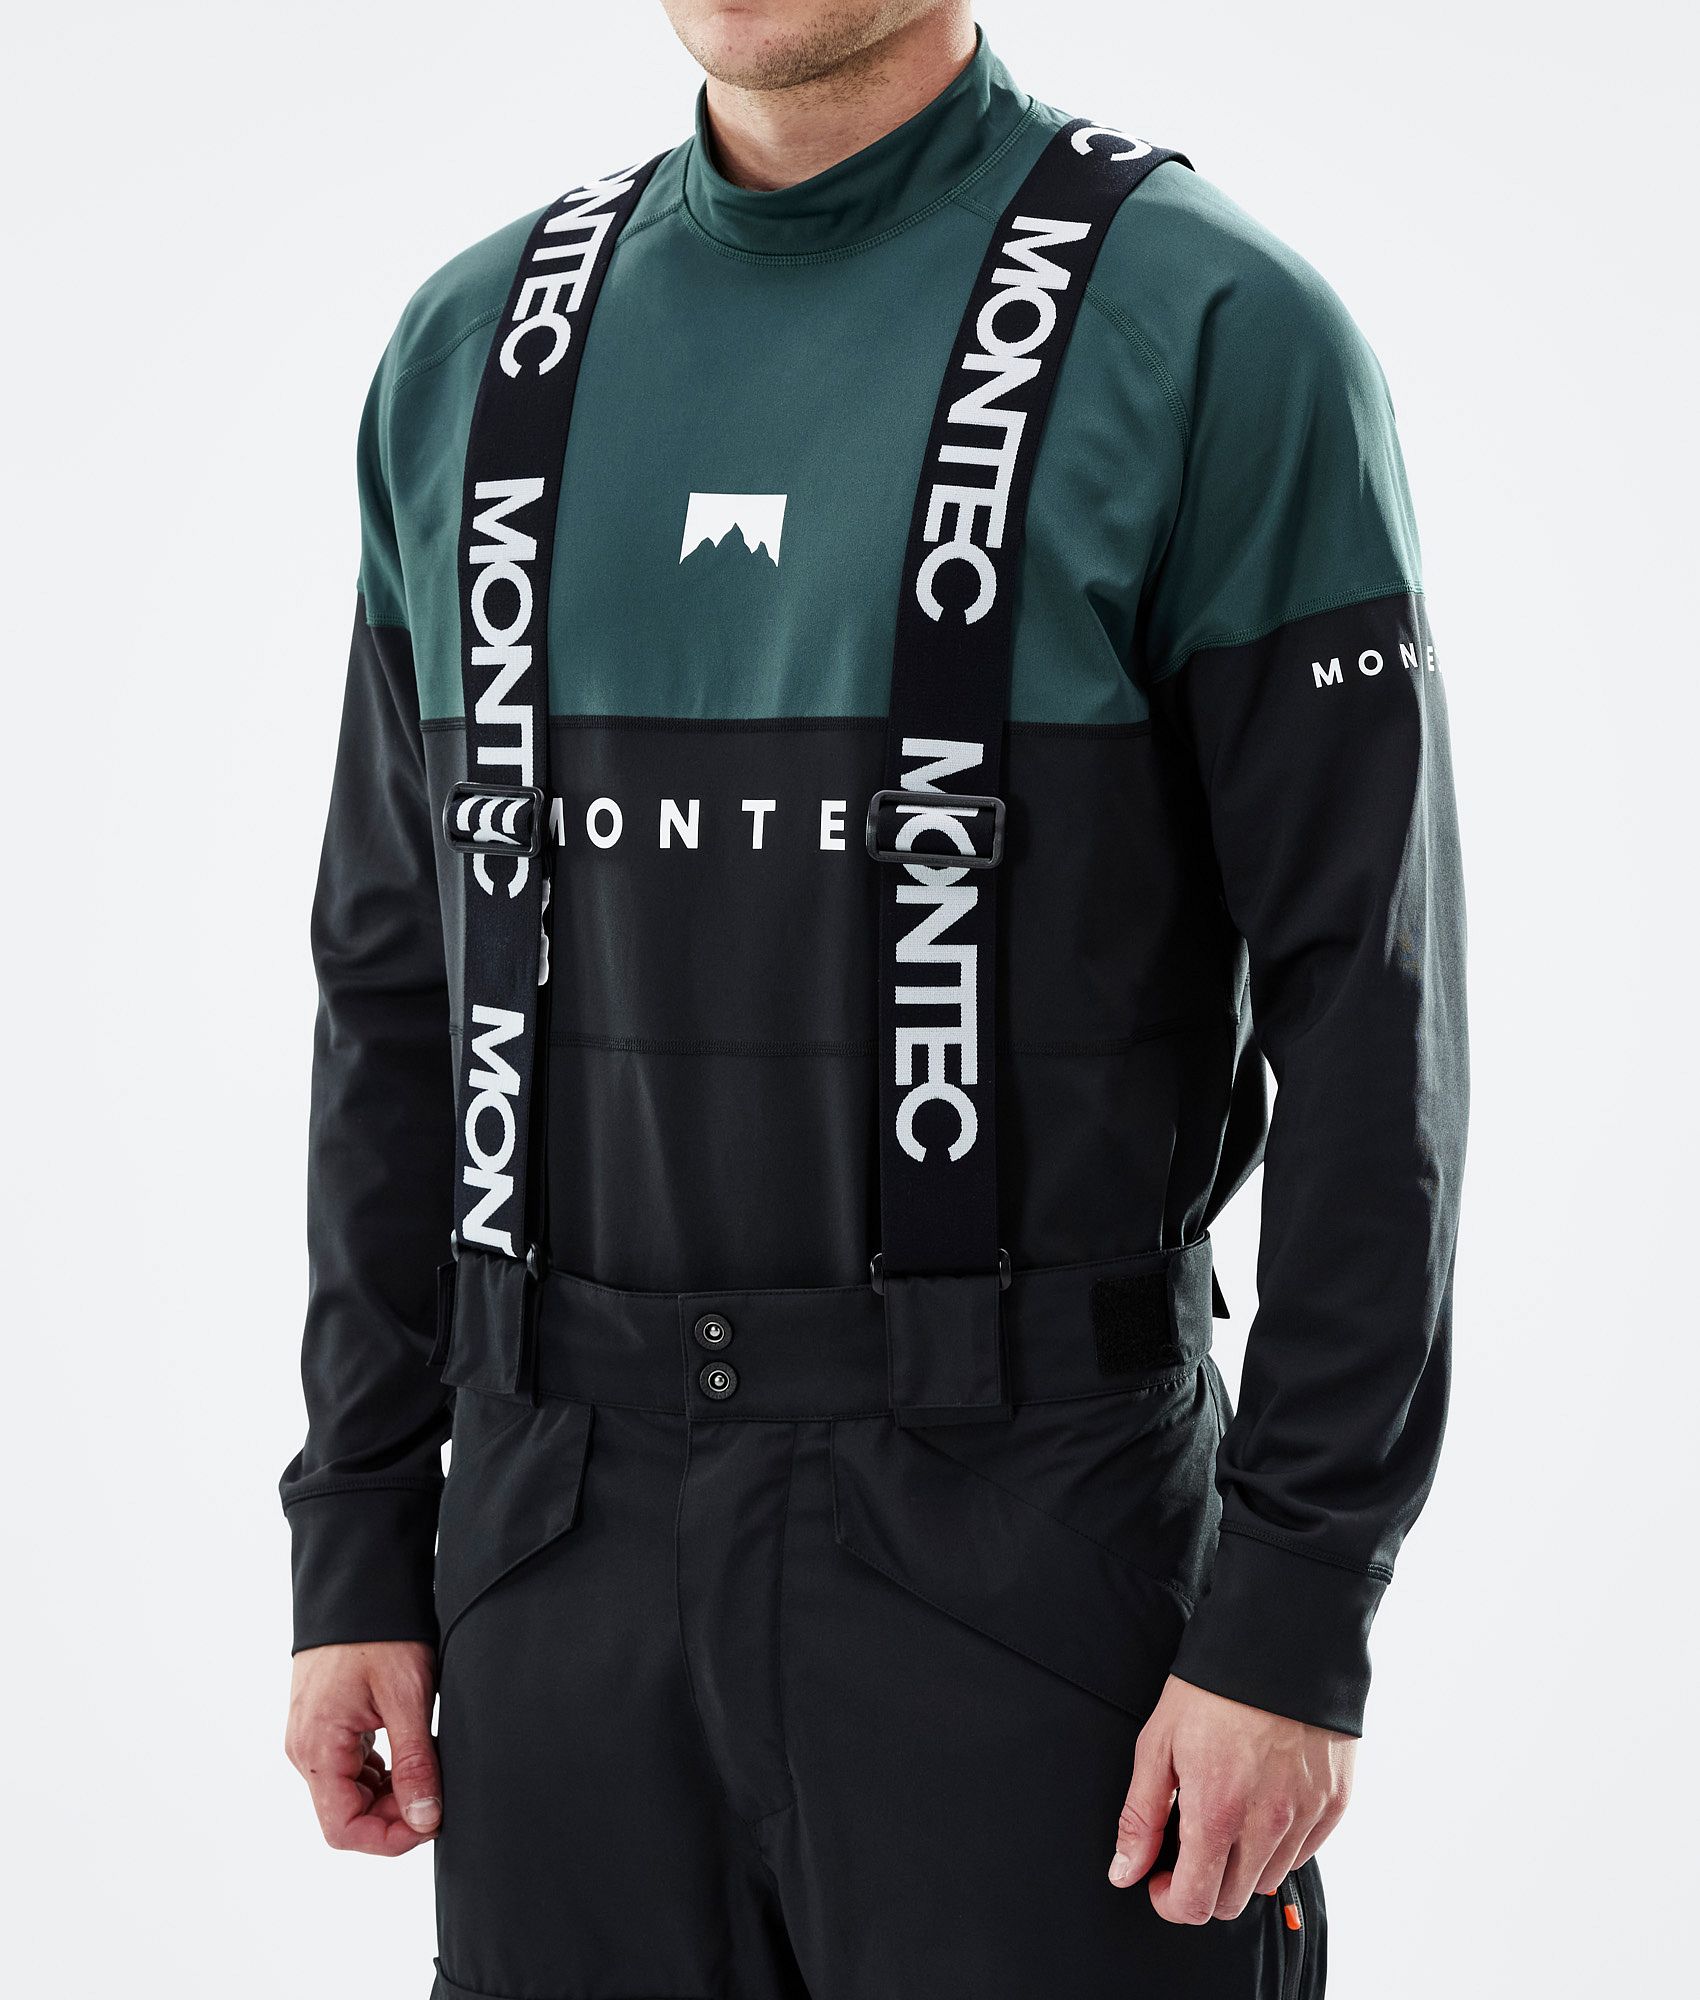 DLX Mens Ski Trousers Salopettes Detachable Braces Kristoff II | eBay